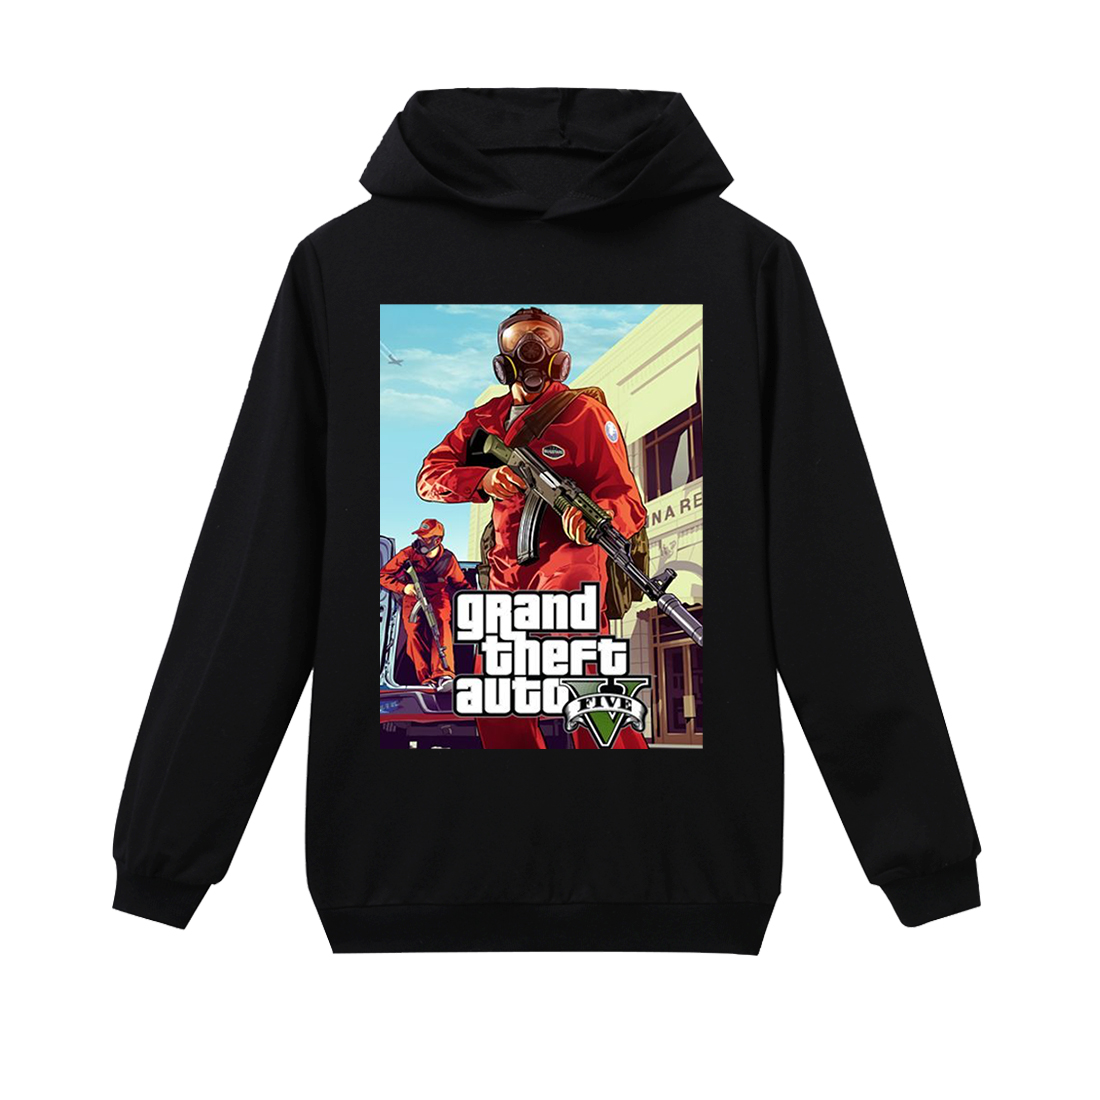 Kids Oversized Baby Hoodie Grand Theft Auto Boy Clothes Toddler Girls Sweatshirt GTA 5 Print Children Clothing Teens Tops